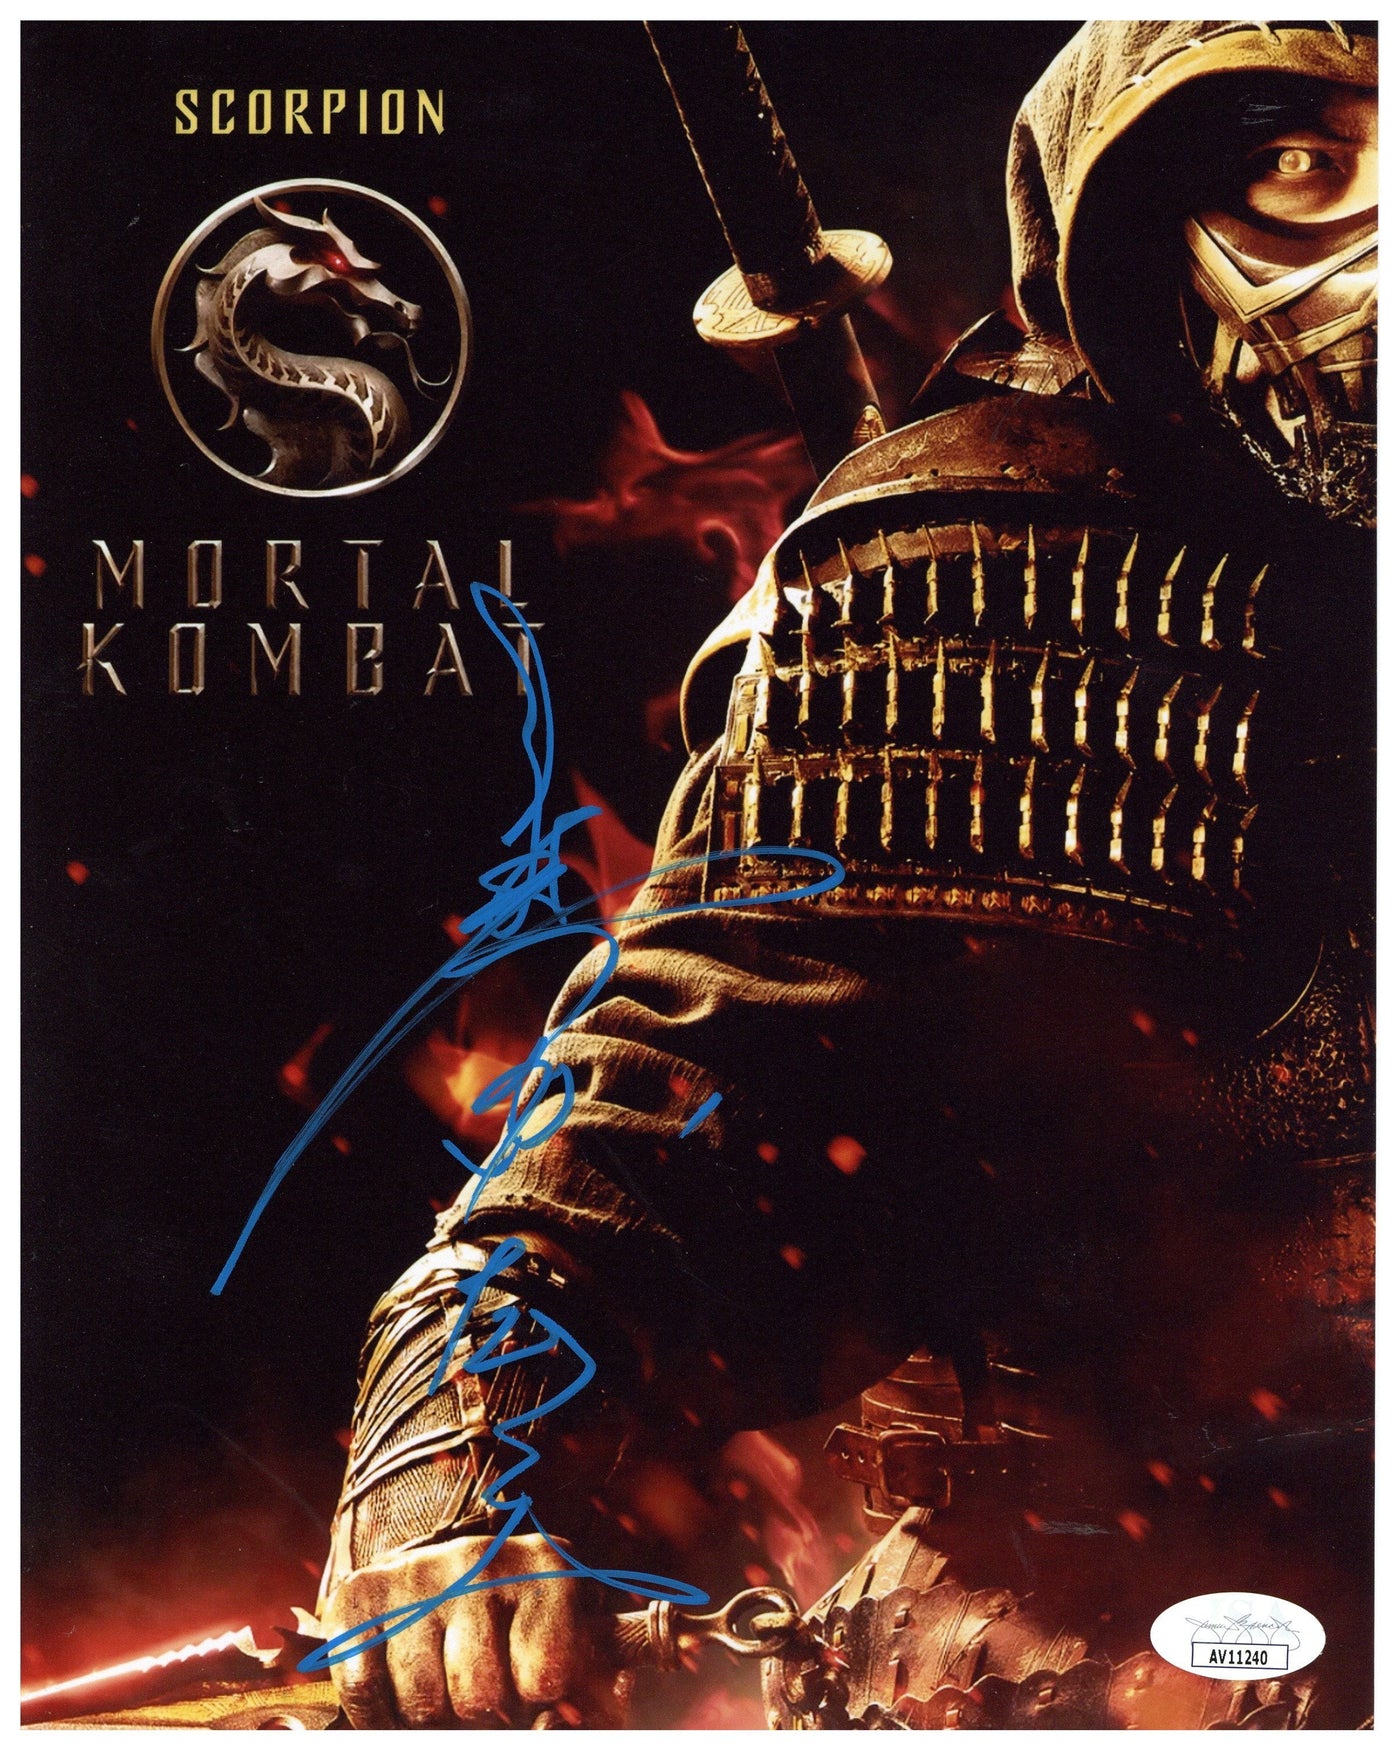 Hiroyuki Sanada Signed 8x10 Photo Mortal Kombat Autographed JSA COA